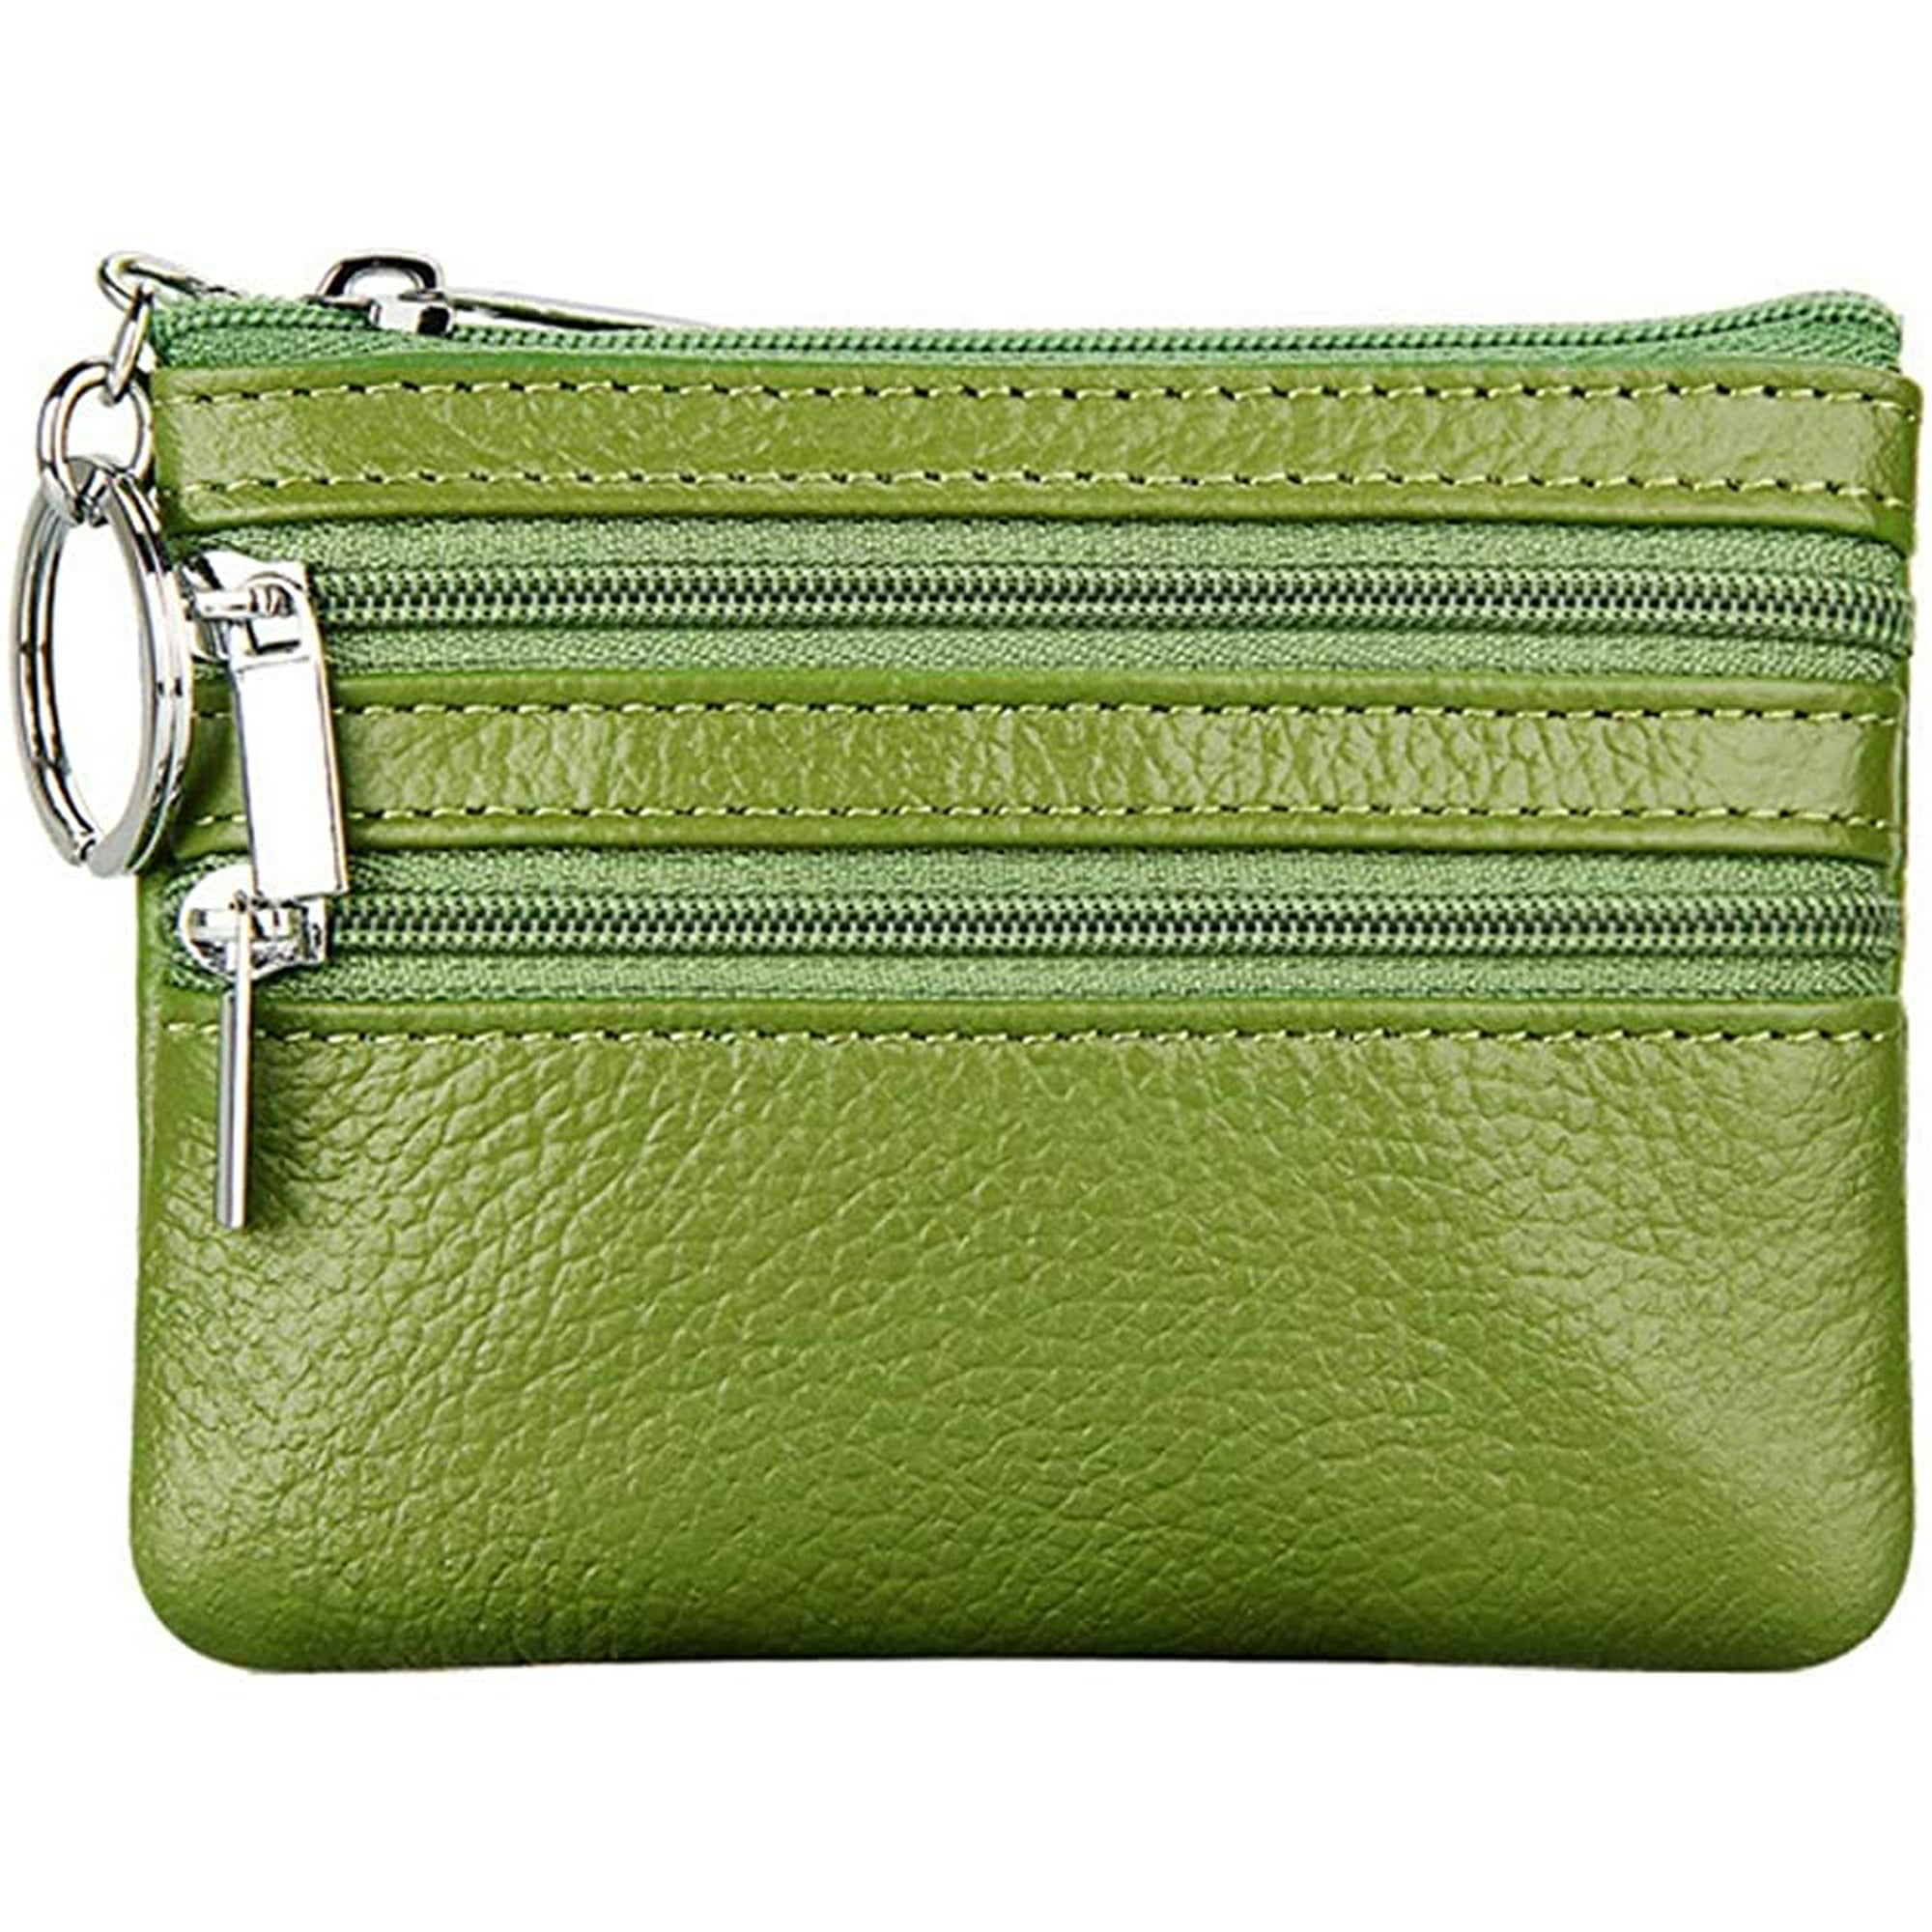 Diannasun Women's Genuine Leather Coin Purse Mini Pouch Change Wallet With Key Ringyellow Green